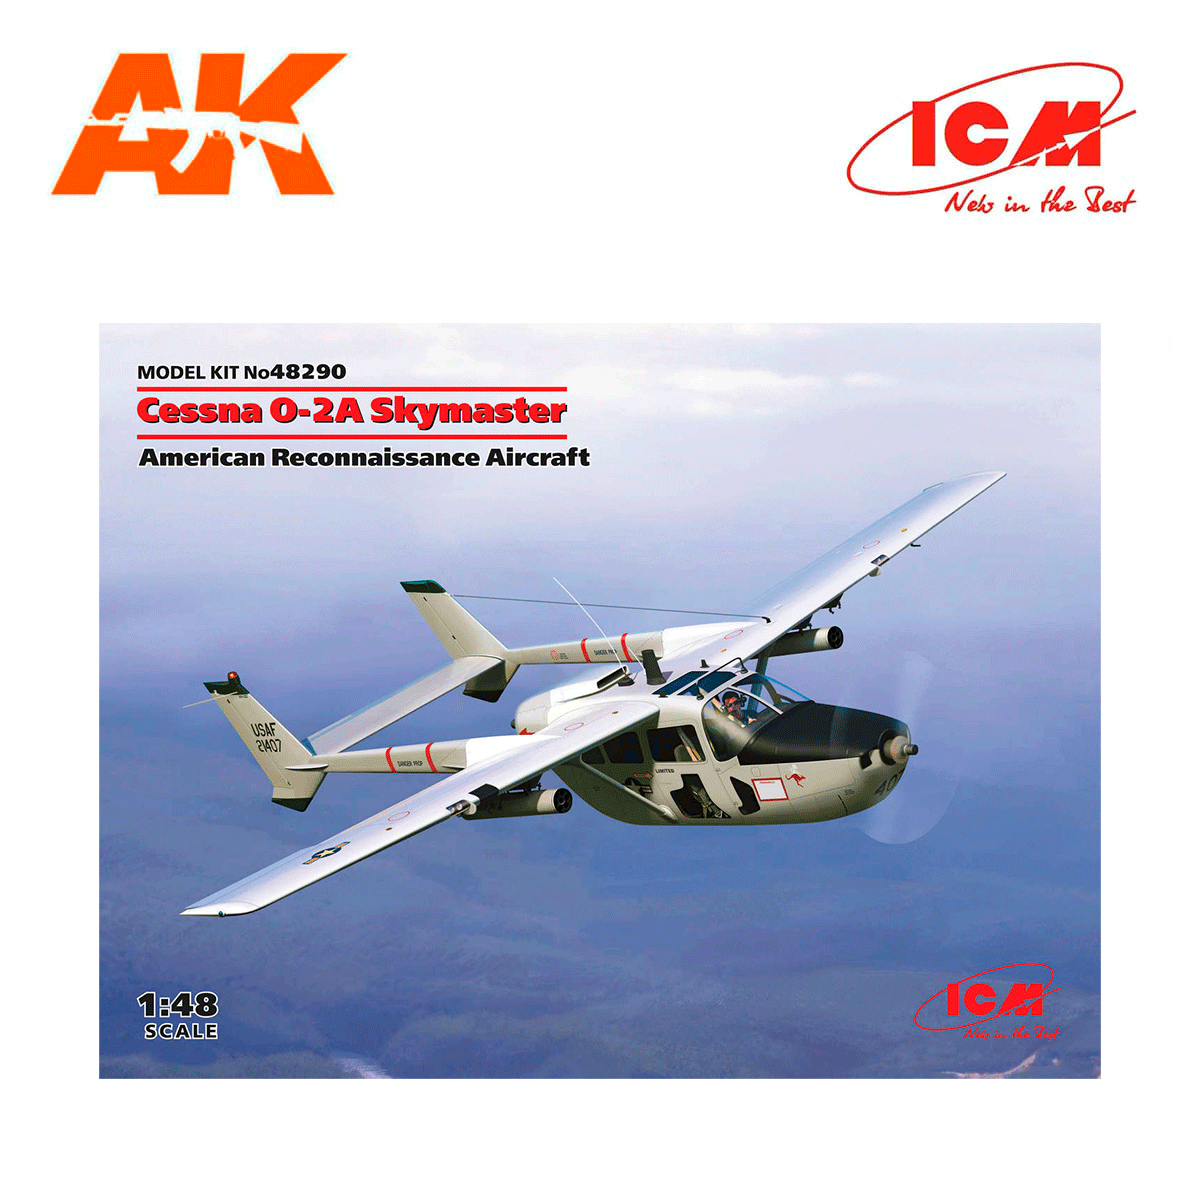 Cessna O-2A Skymaster, American Reconnaissance Aircraft (100% new molds)